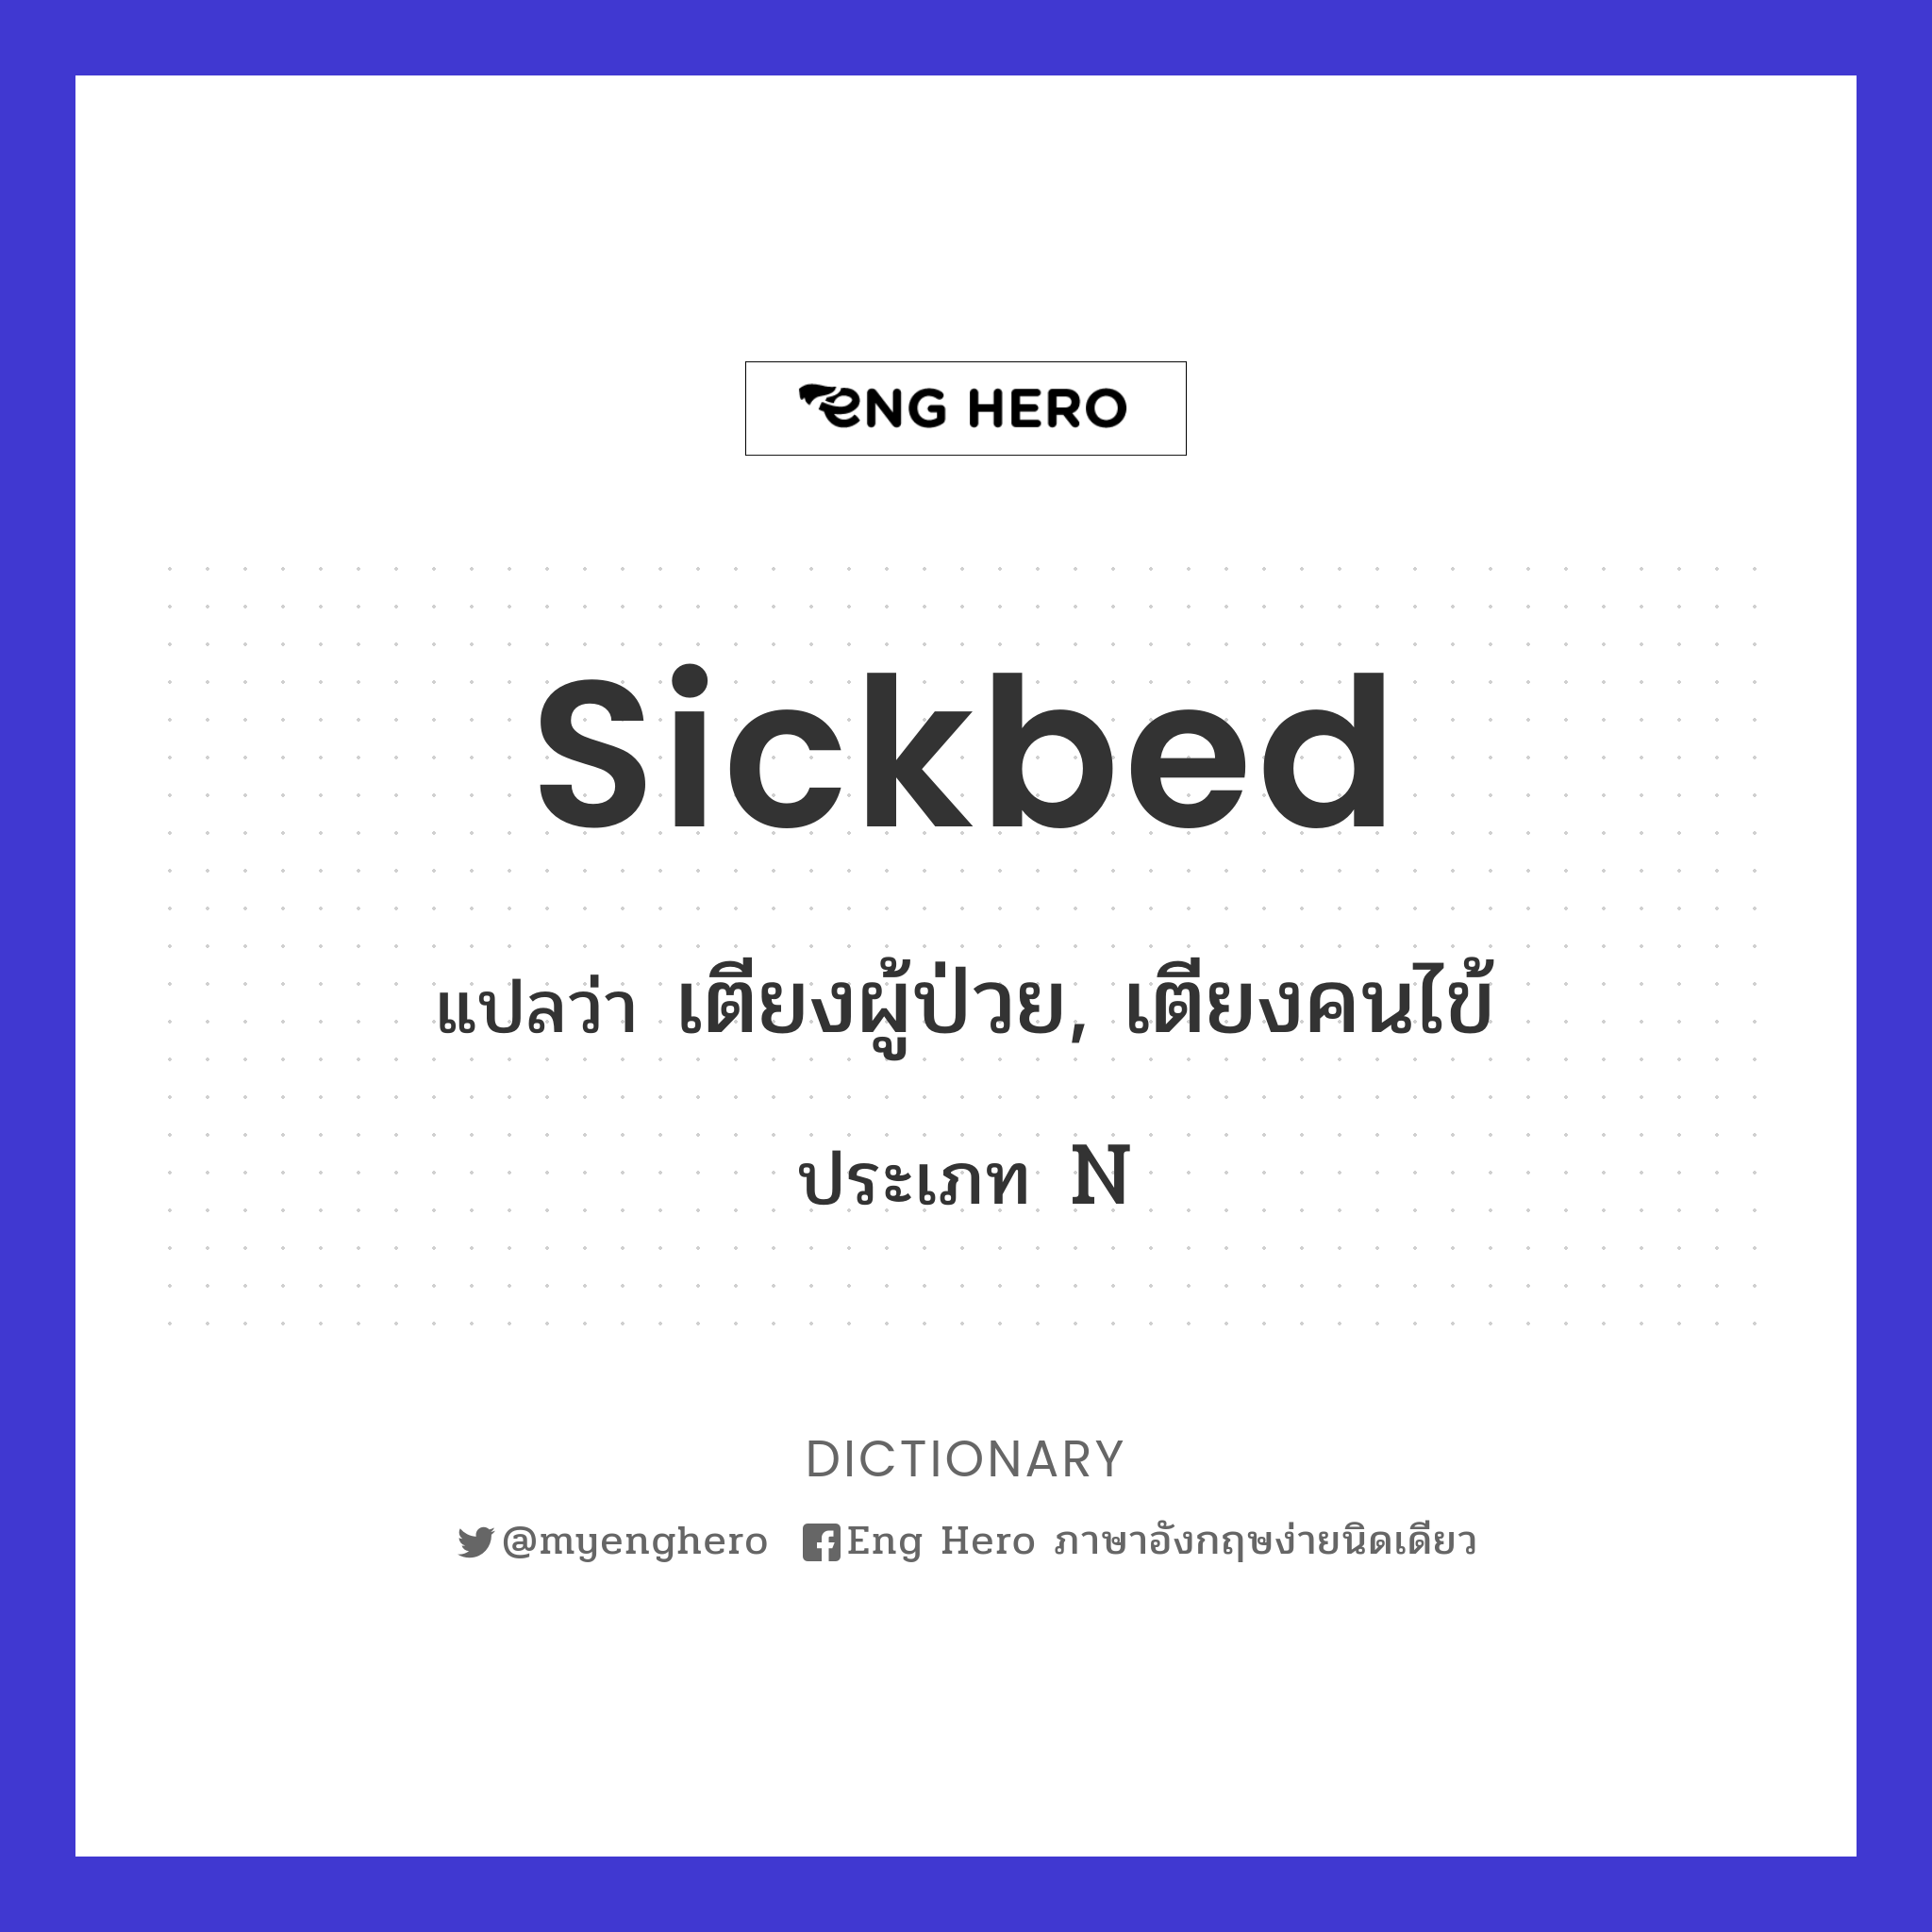 sickbed